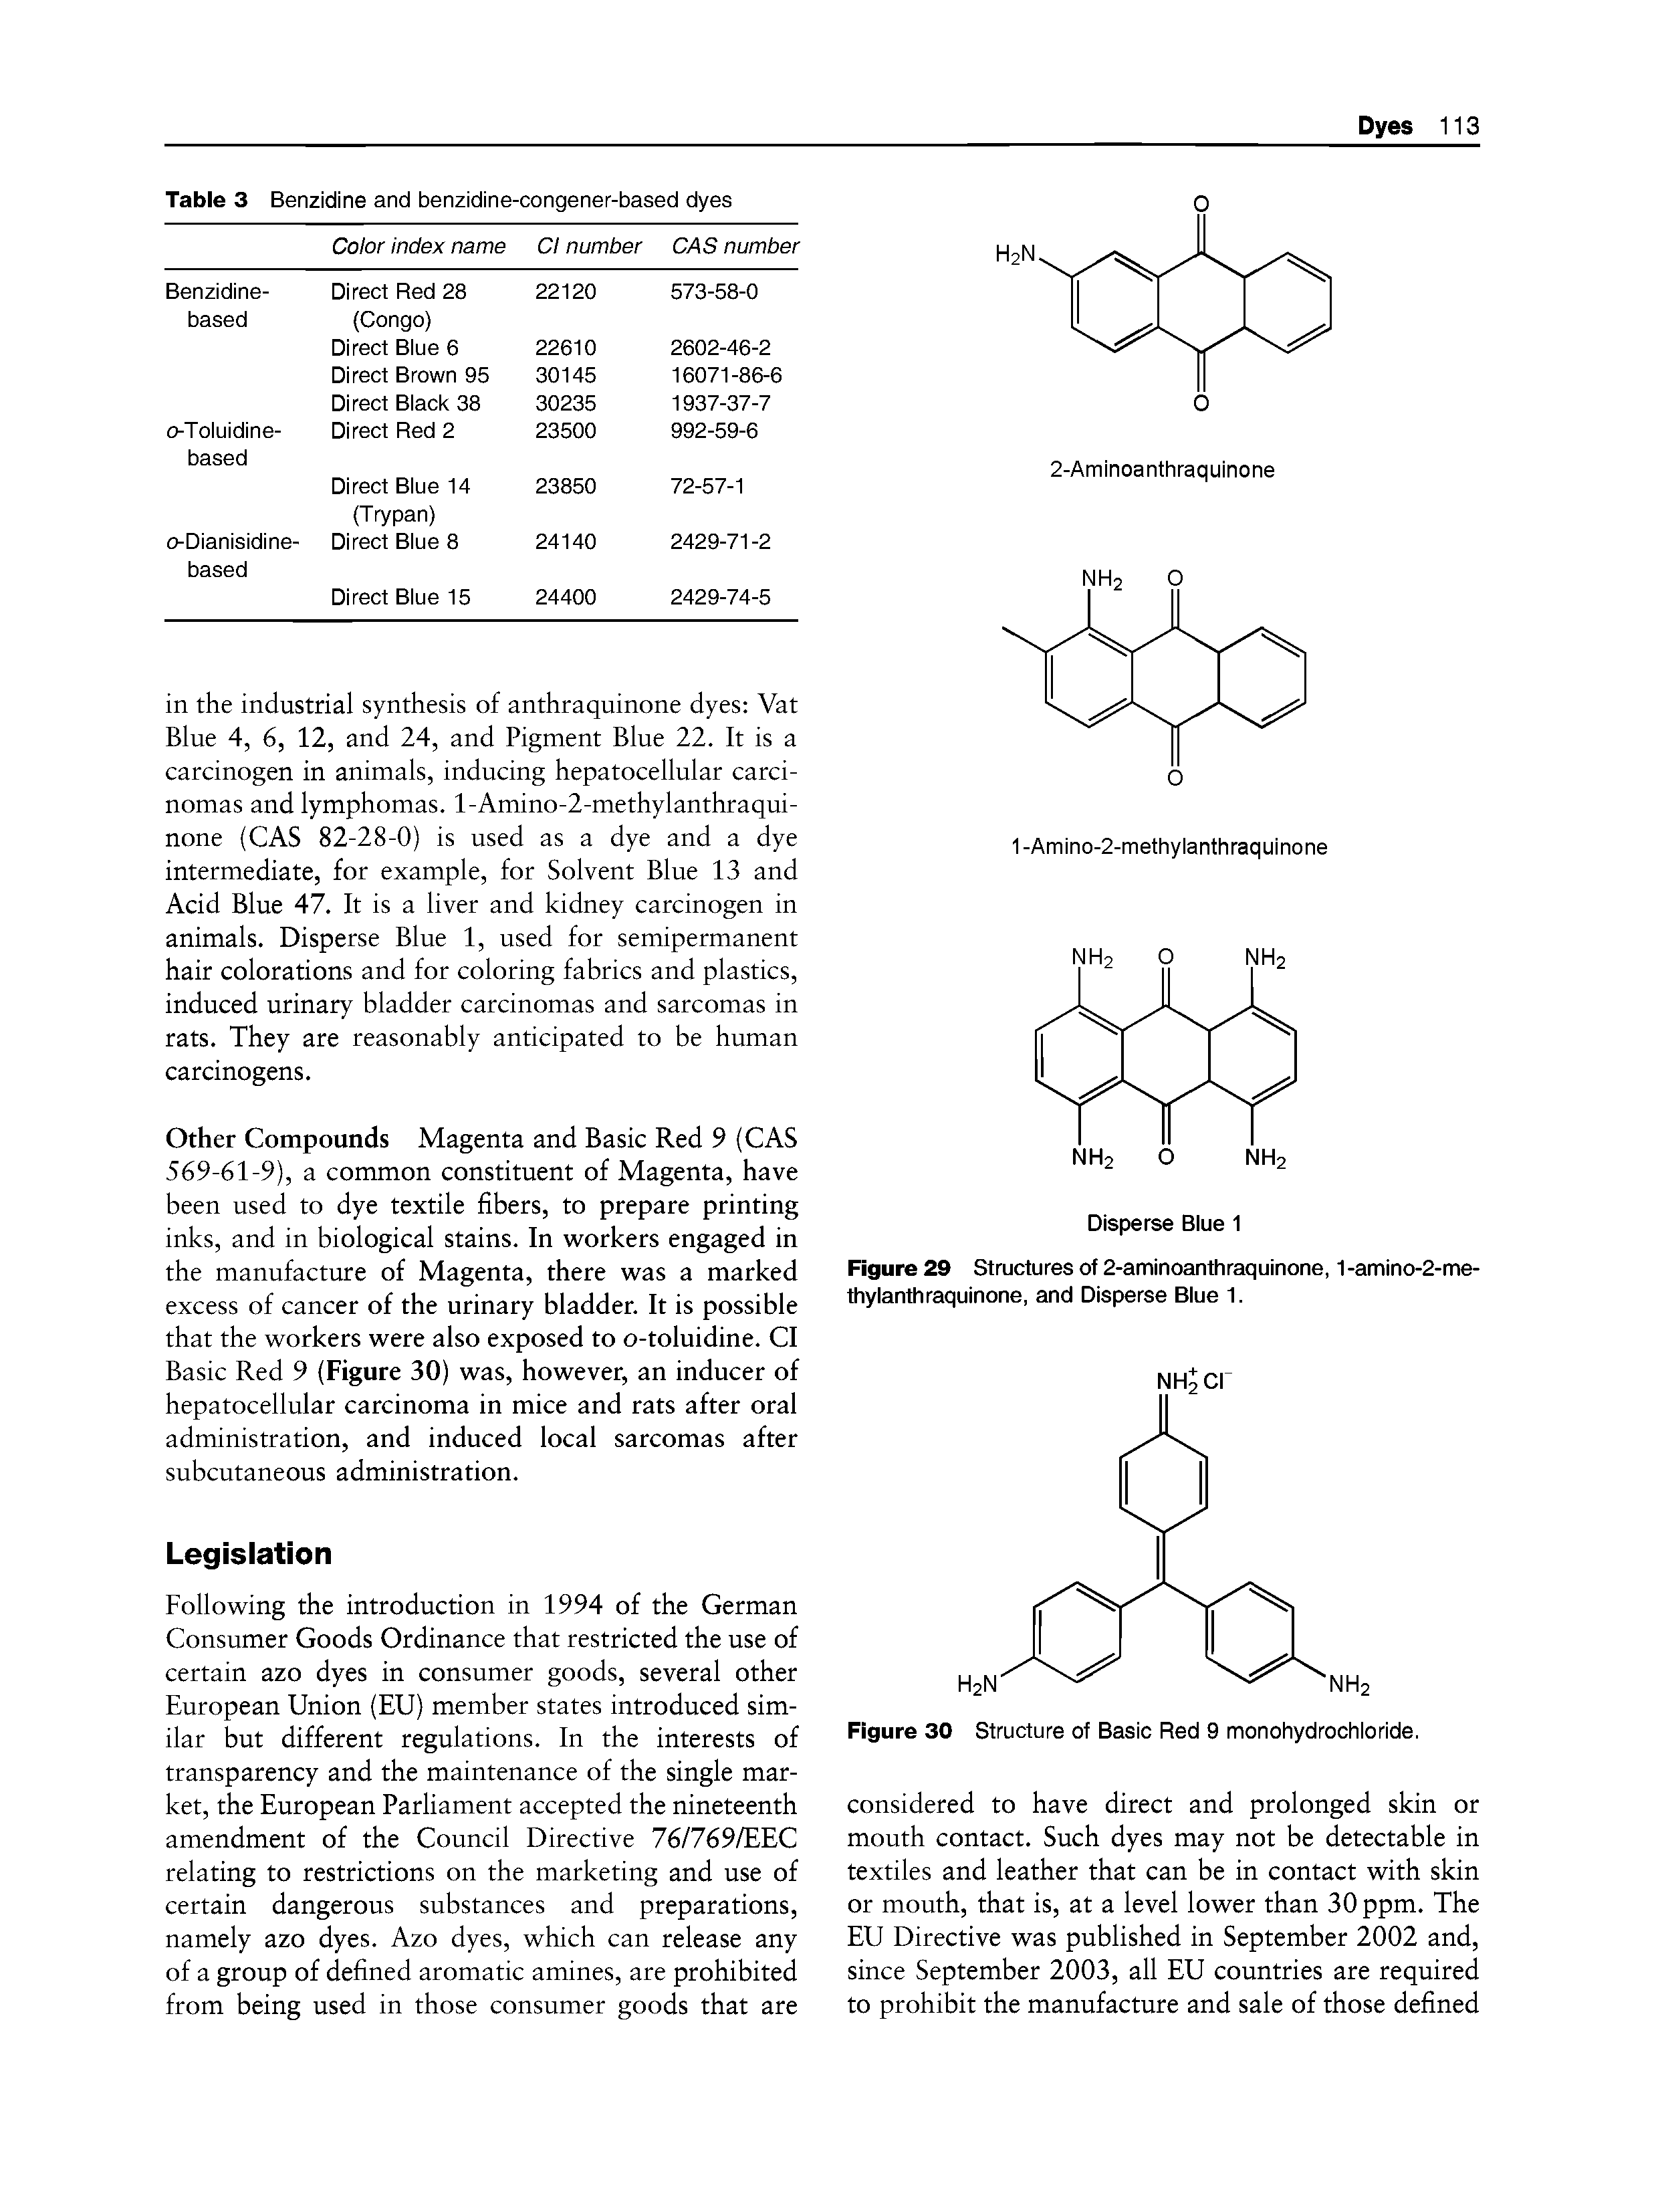 Table 3 Benzidine and benzidine-congener-based dyes...